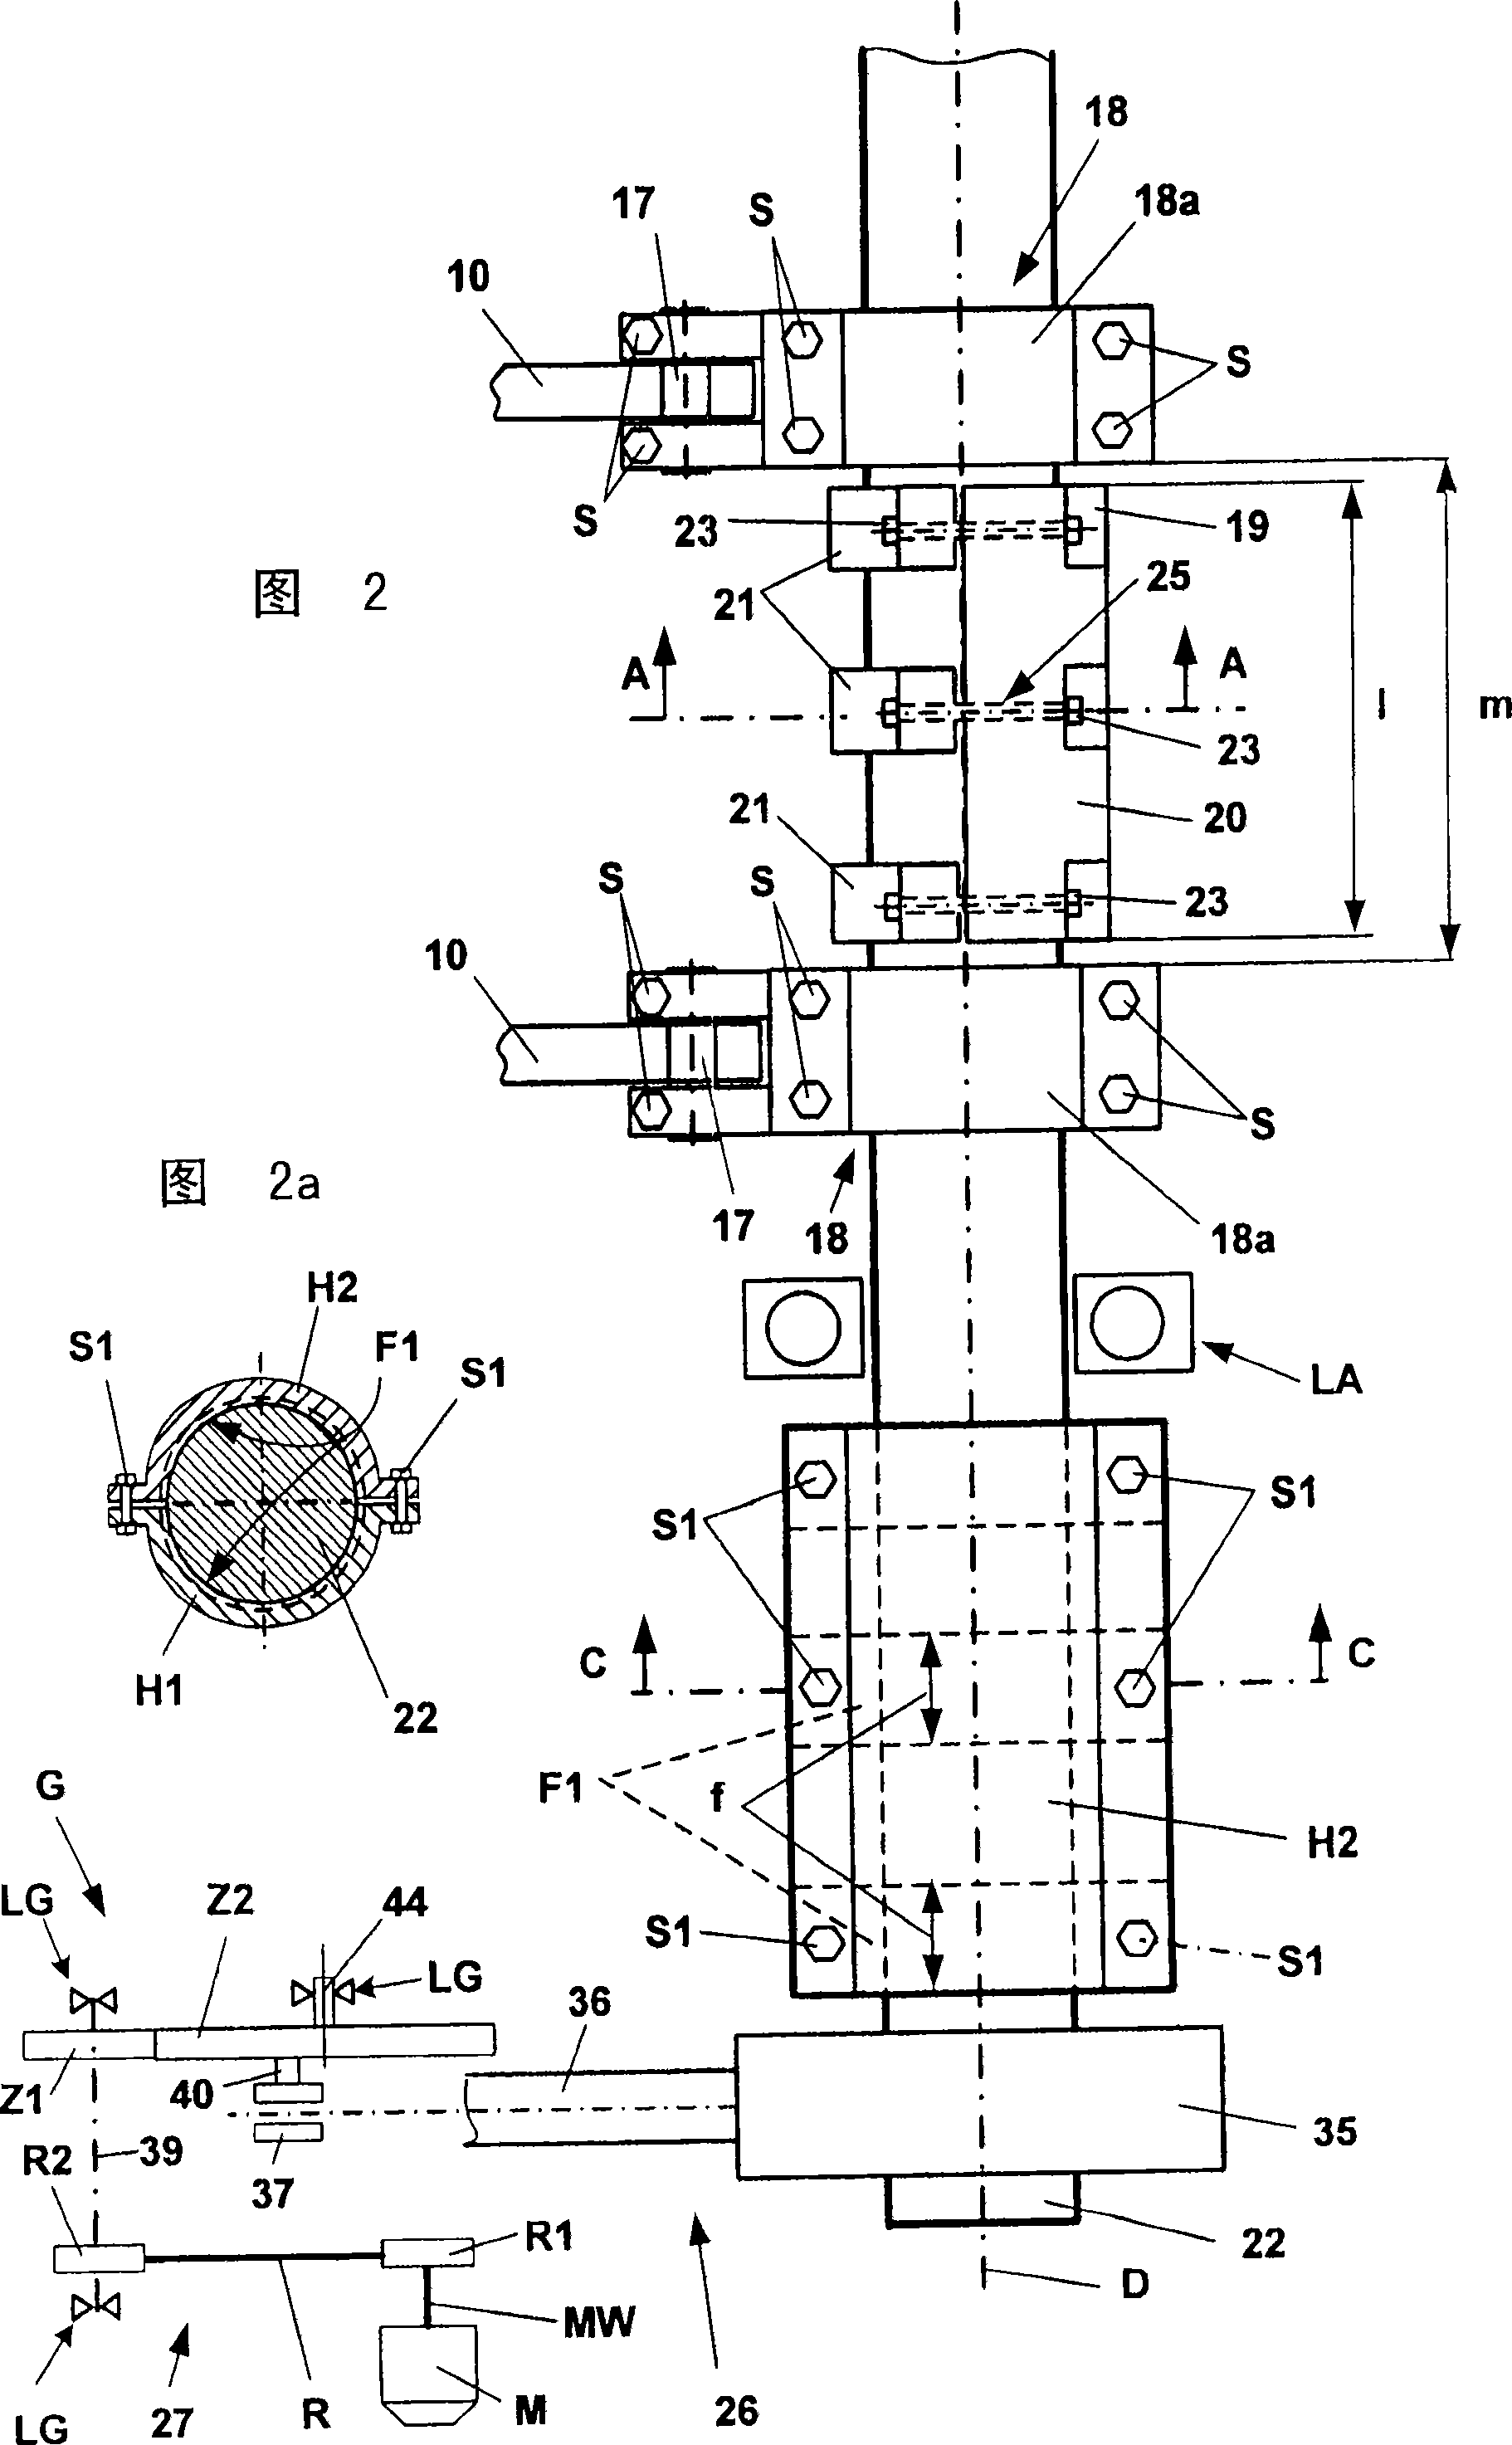 Balancing a nipper mechanism in a combing machine